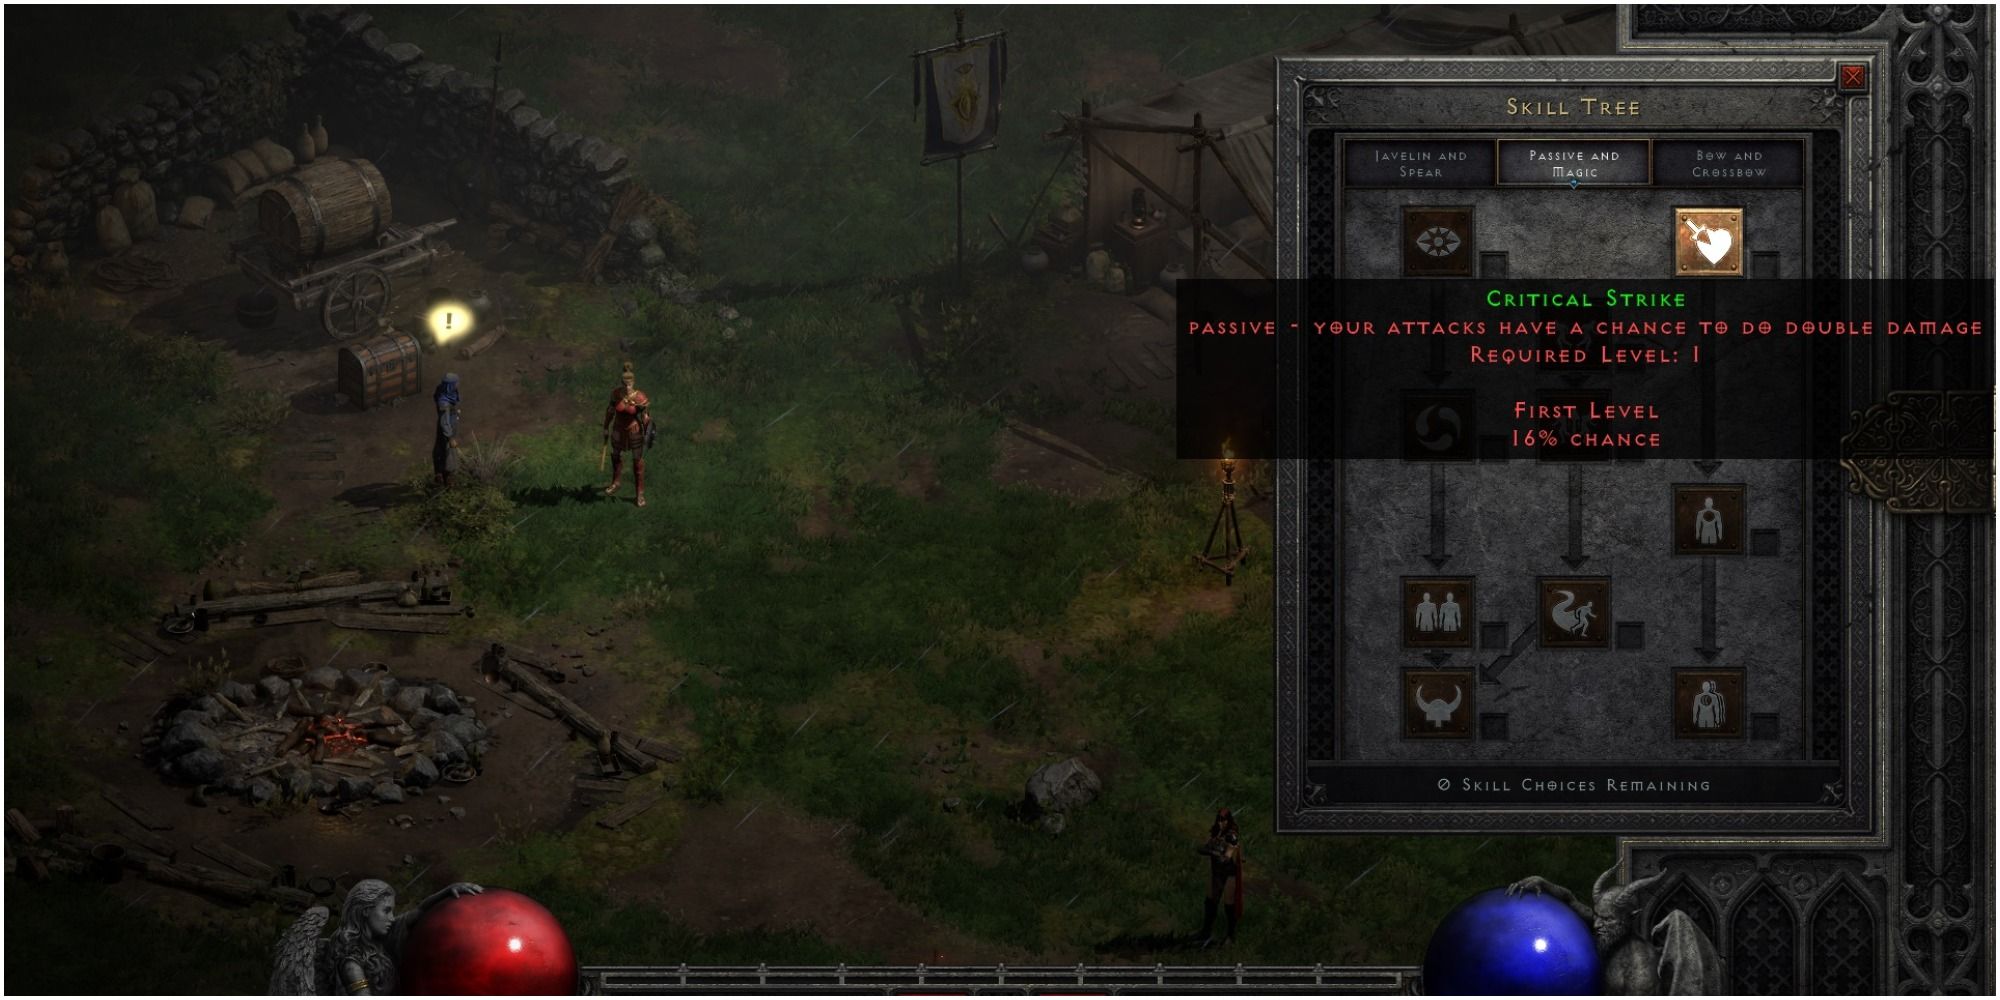 Diablo 2 Resurrected Critical Strike Description At Level One